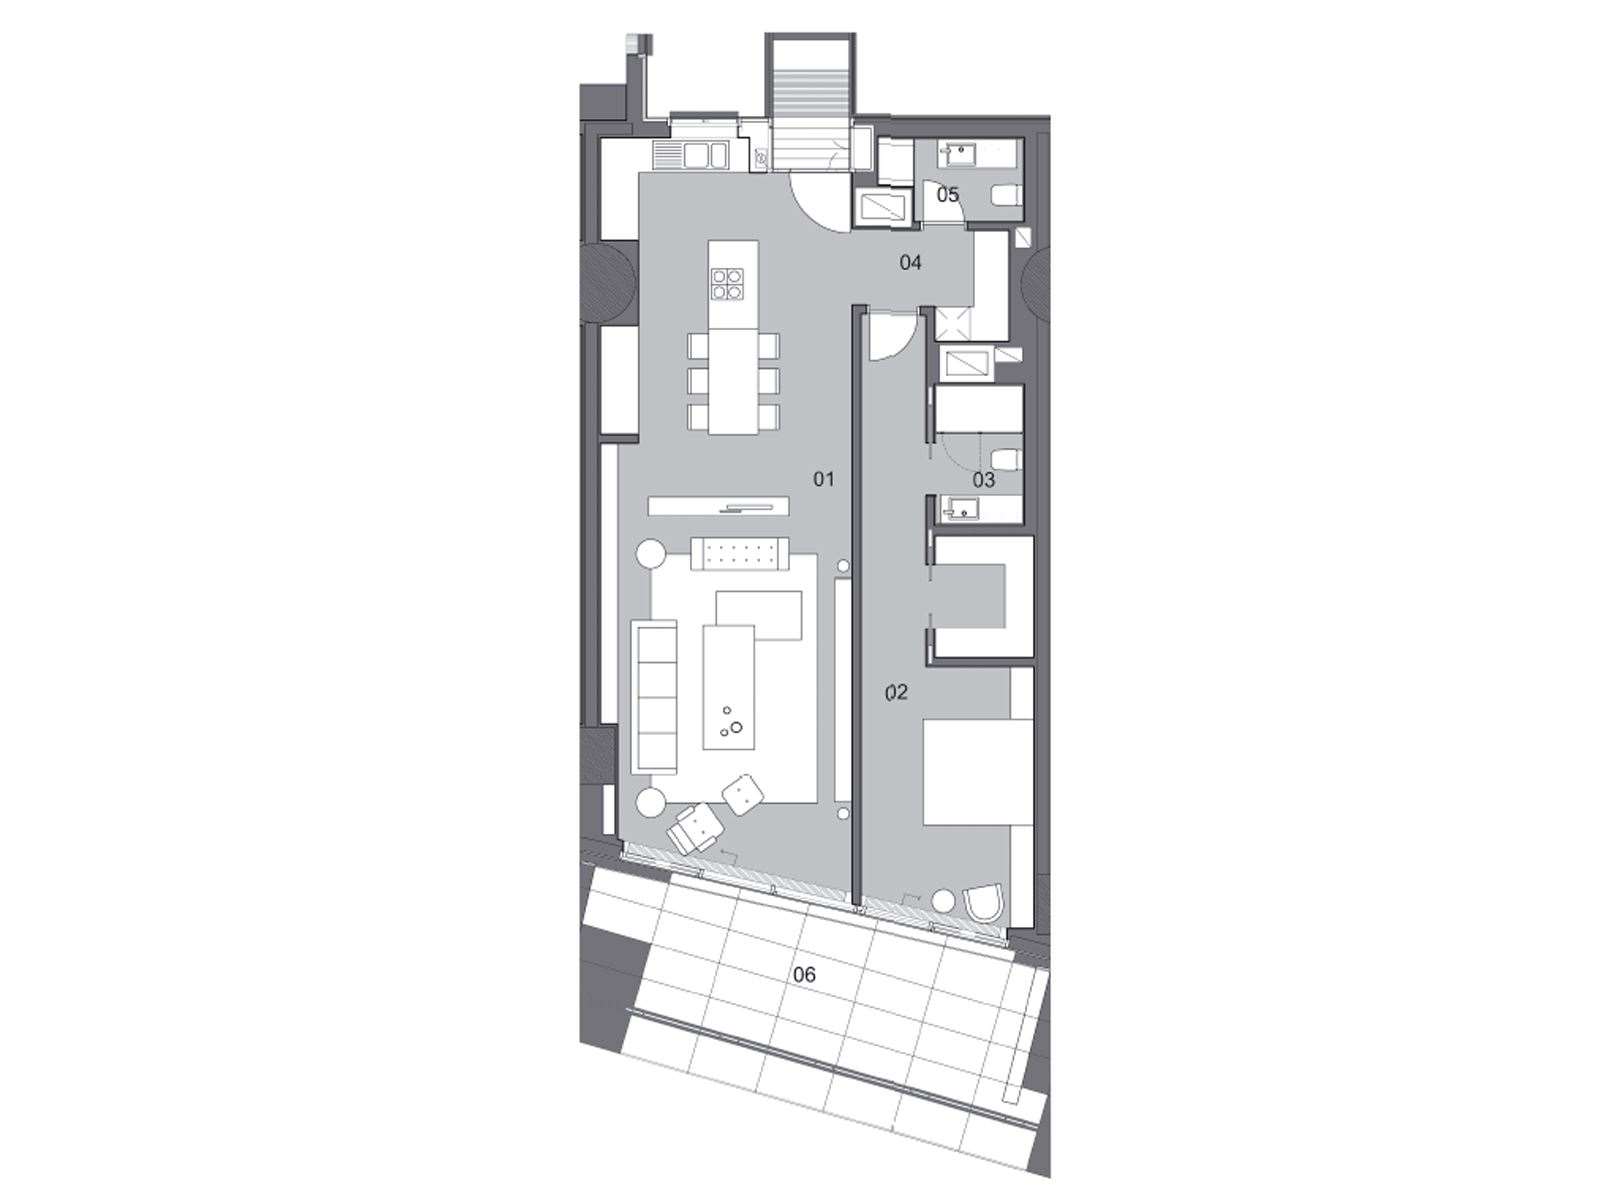 Zorlu Center Luxury Apartments Central 1+1 Floor Plan m2